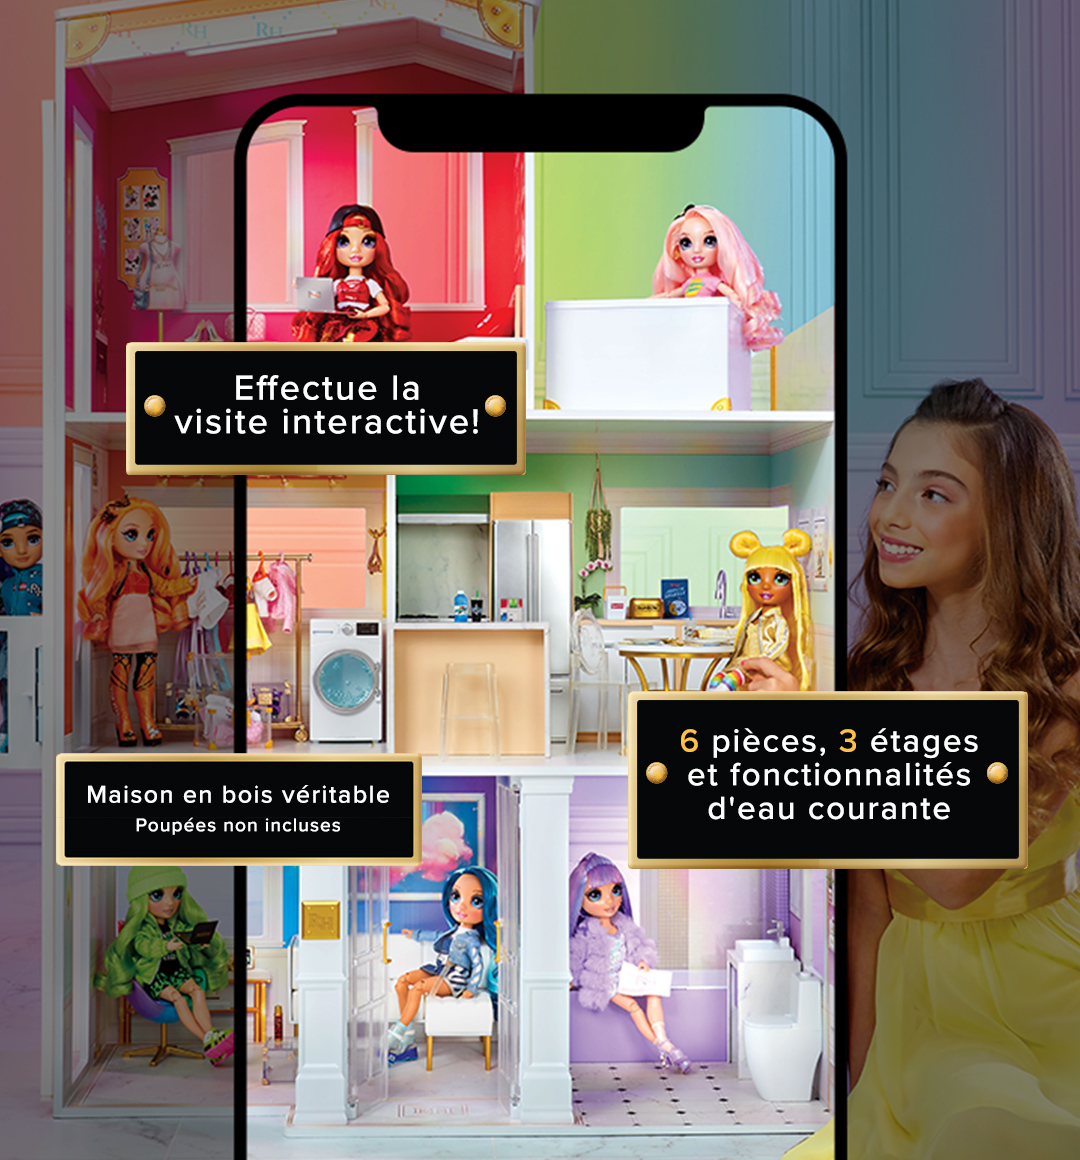 Rainbow High House Playset Interactive Experience